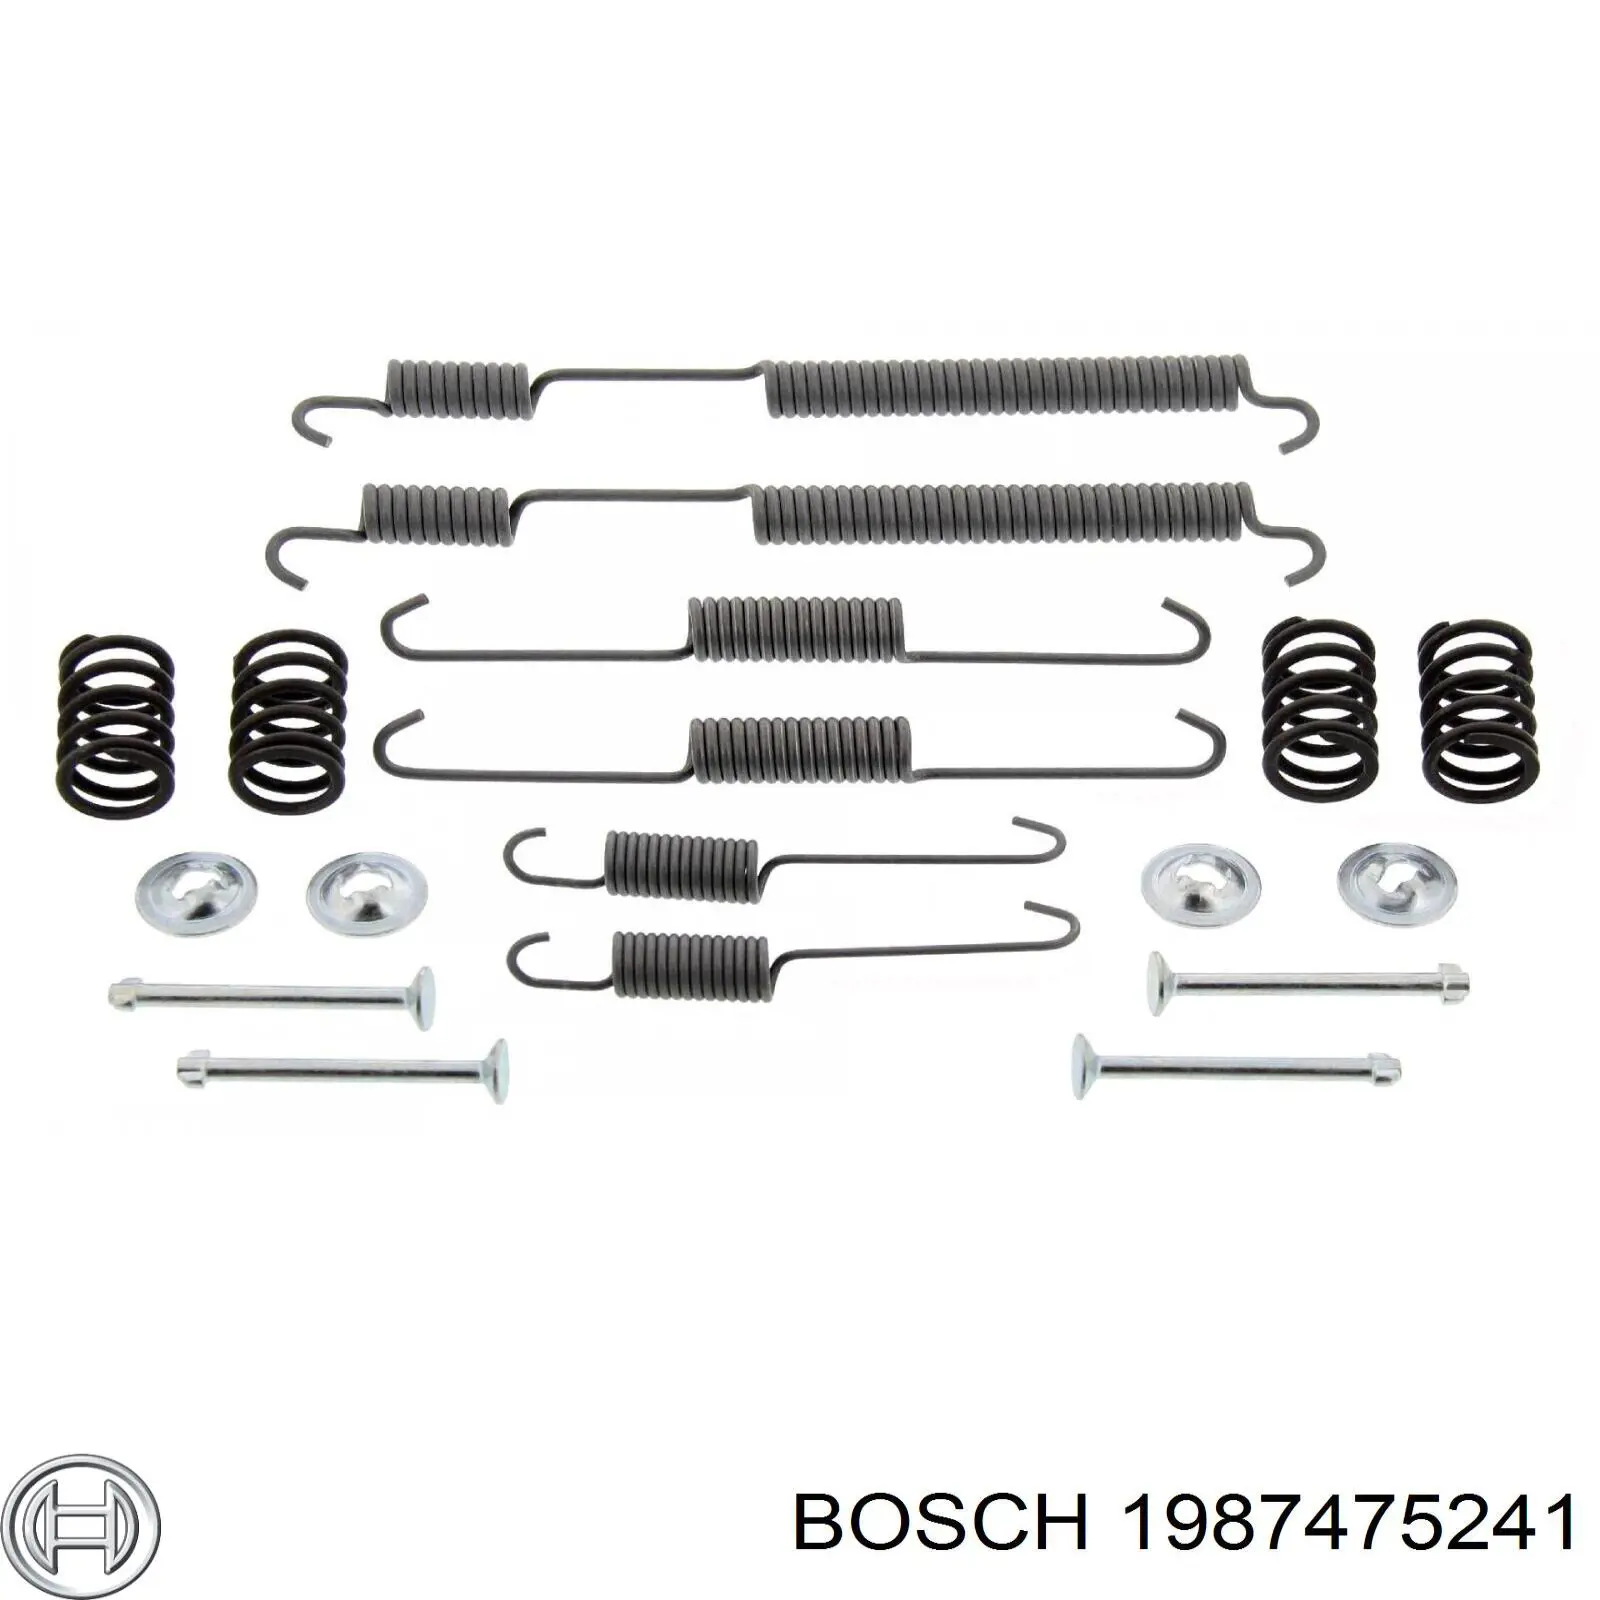 1987475241 Bosch kit de montaje, zapatas de freno traseras